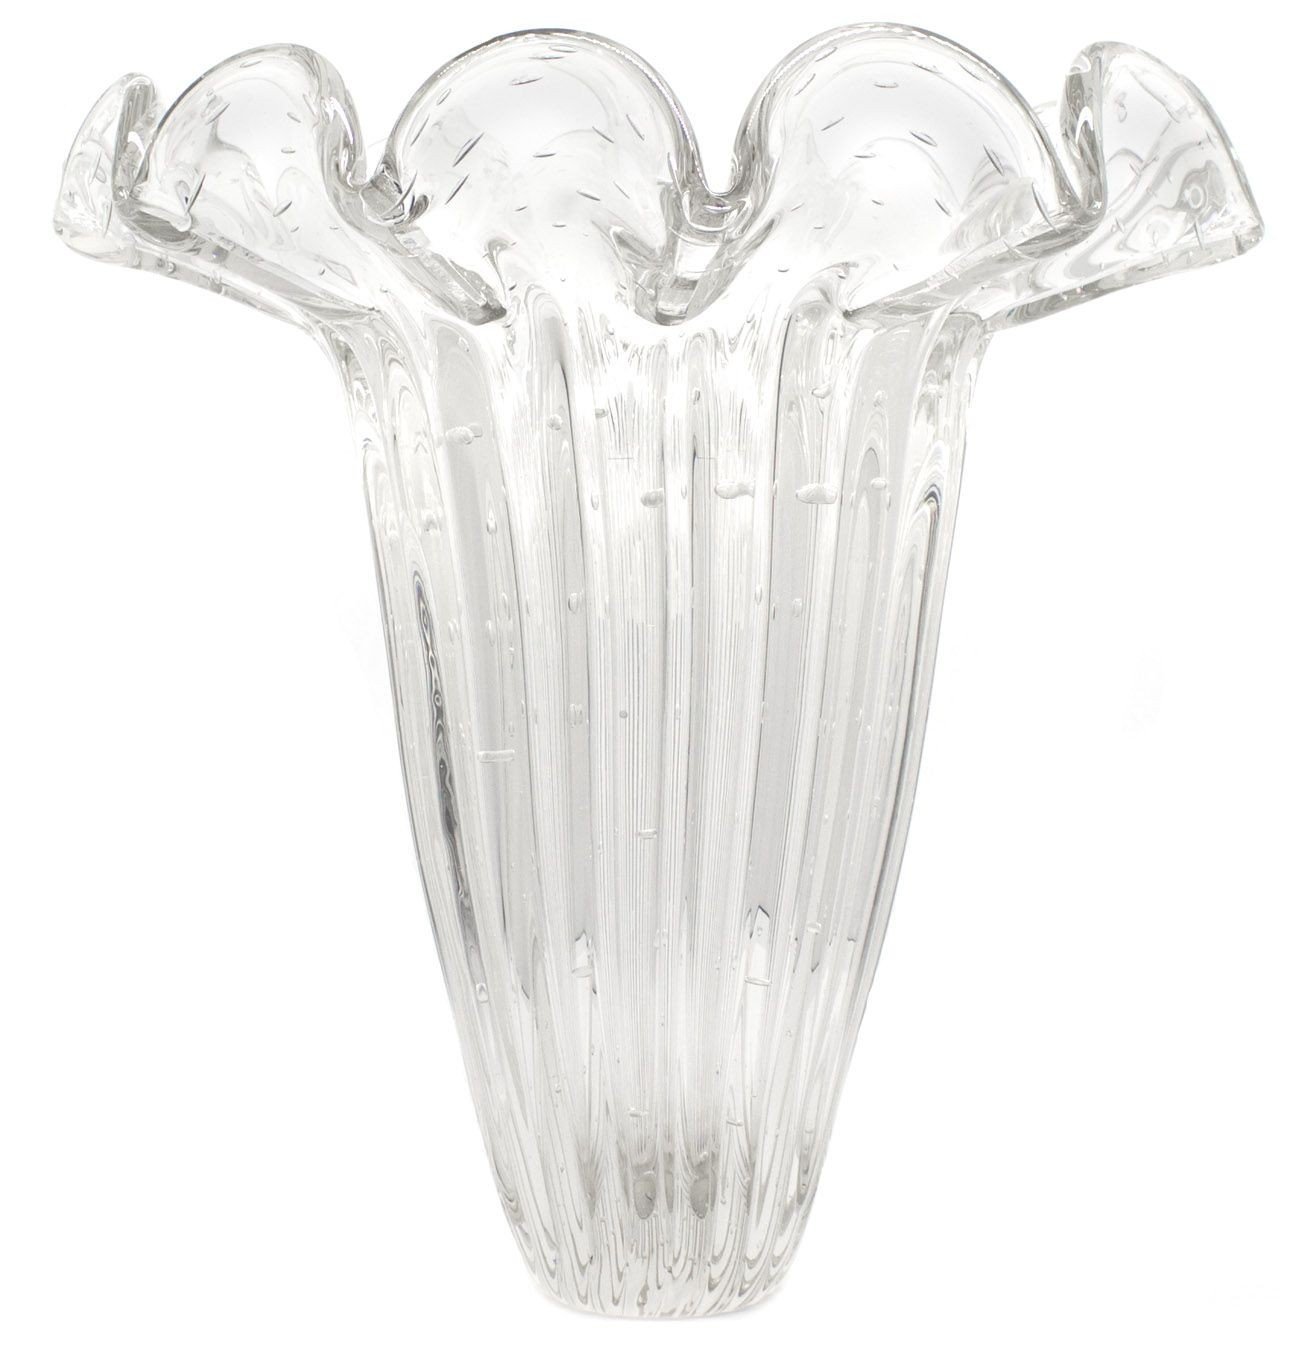 vaso de cristal murano island cor cristal 20876016 1 20181210150705